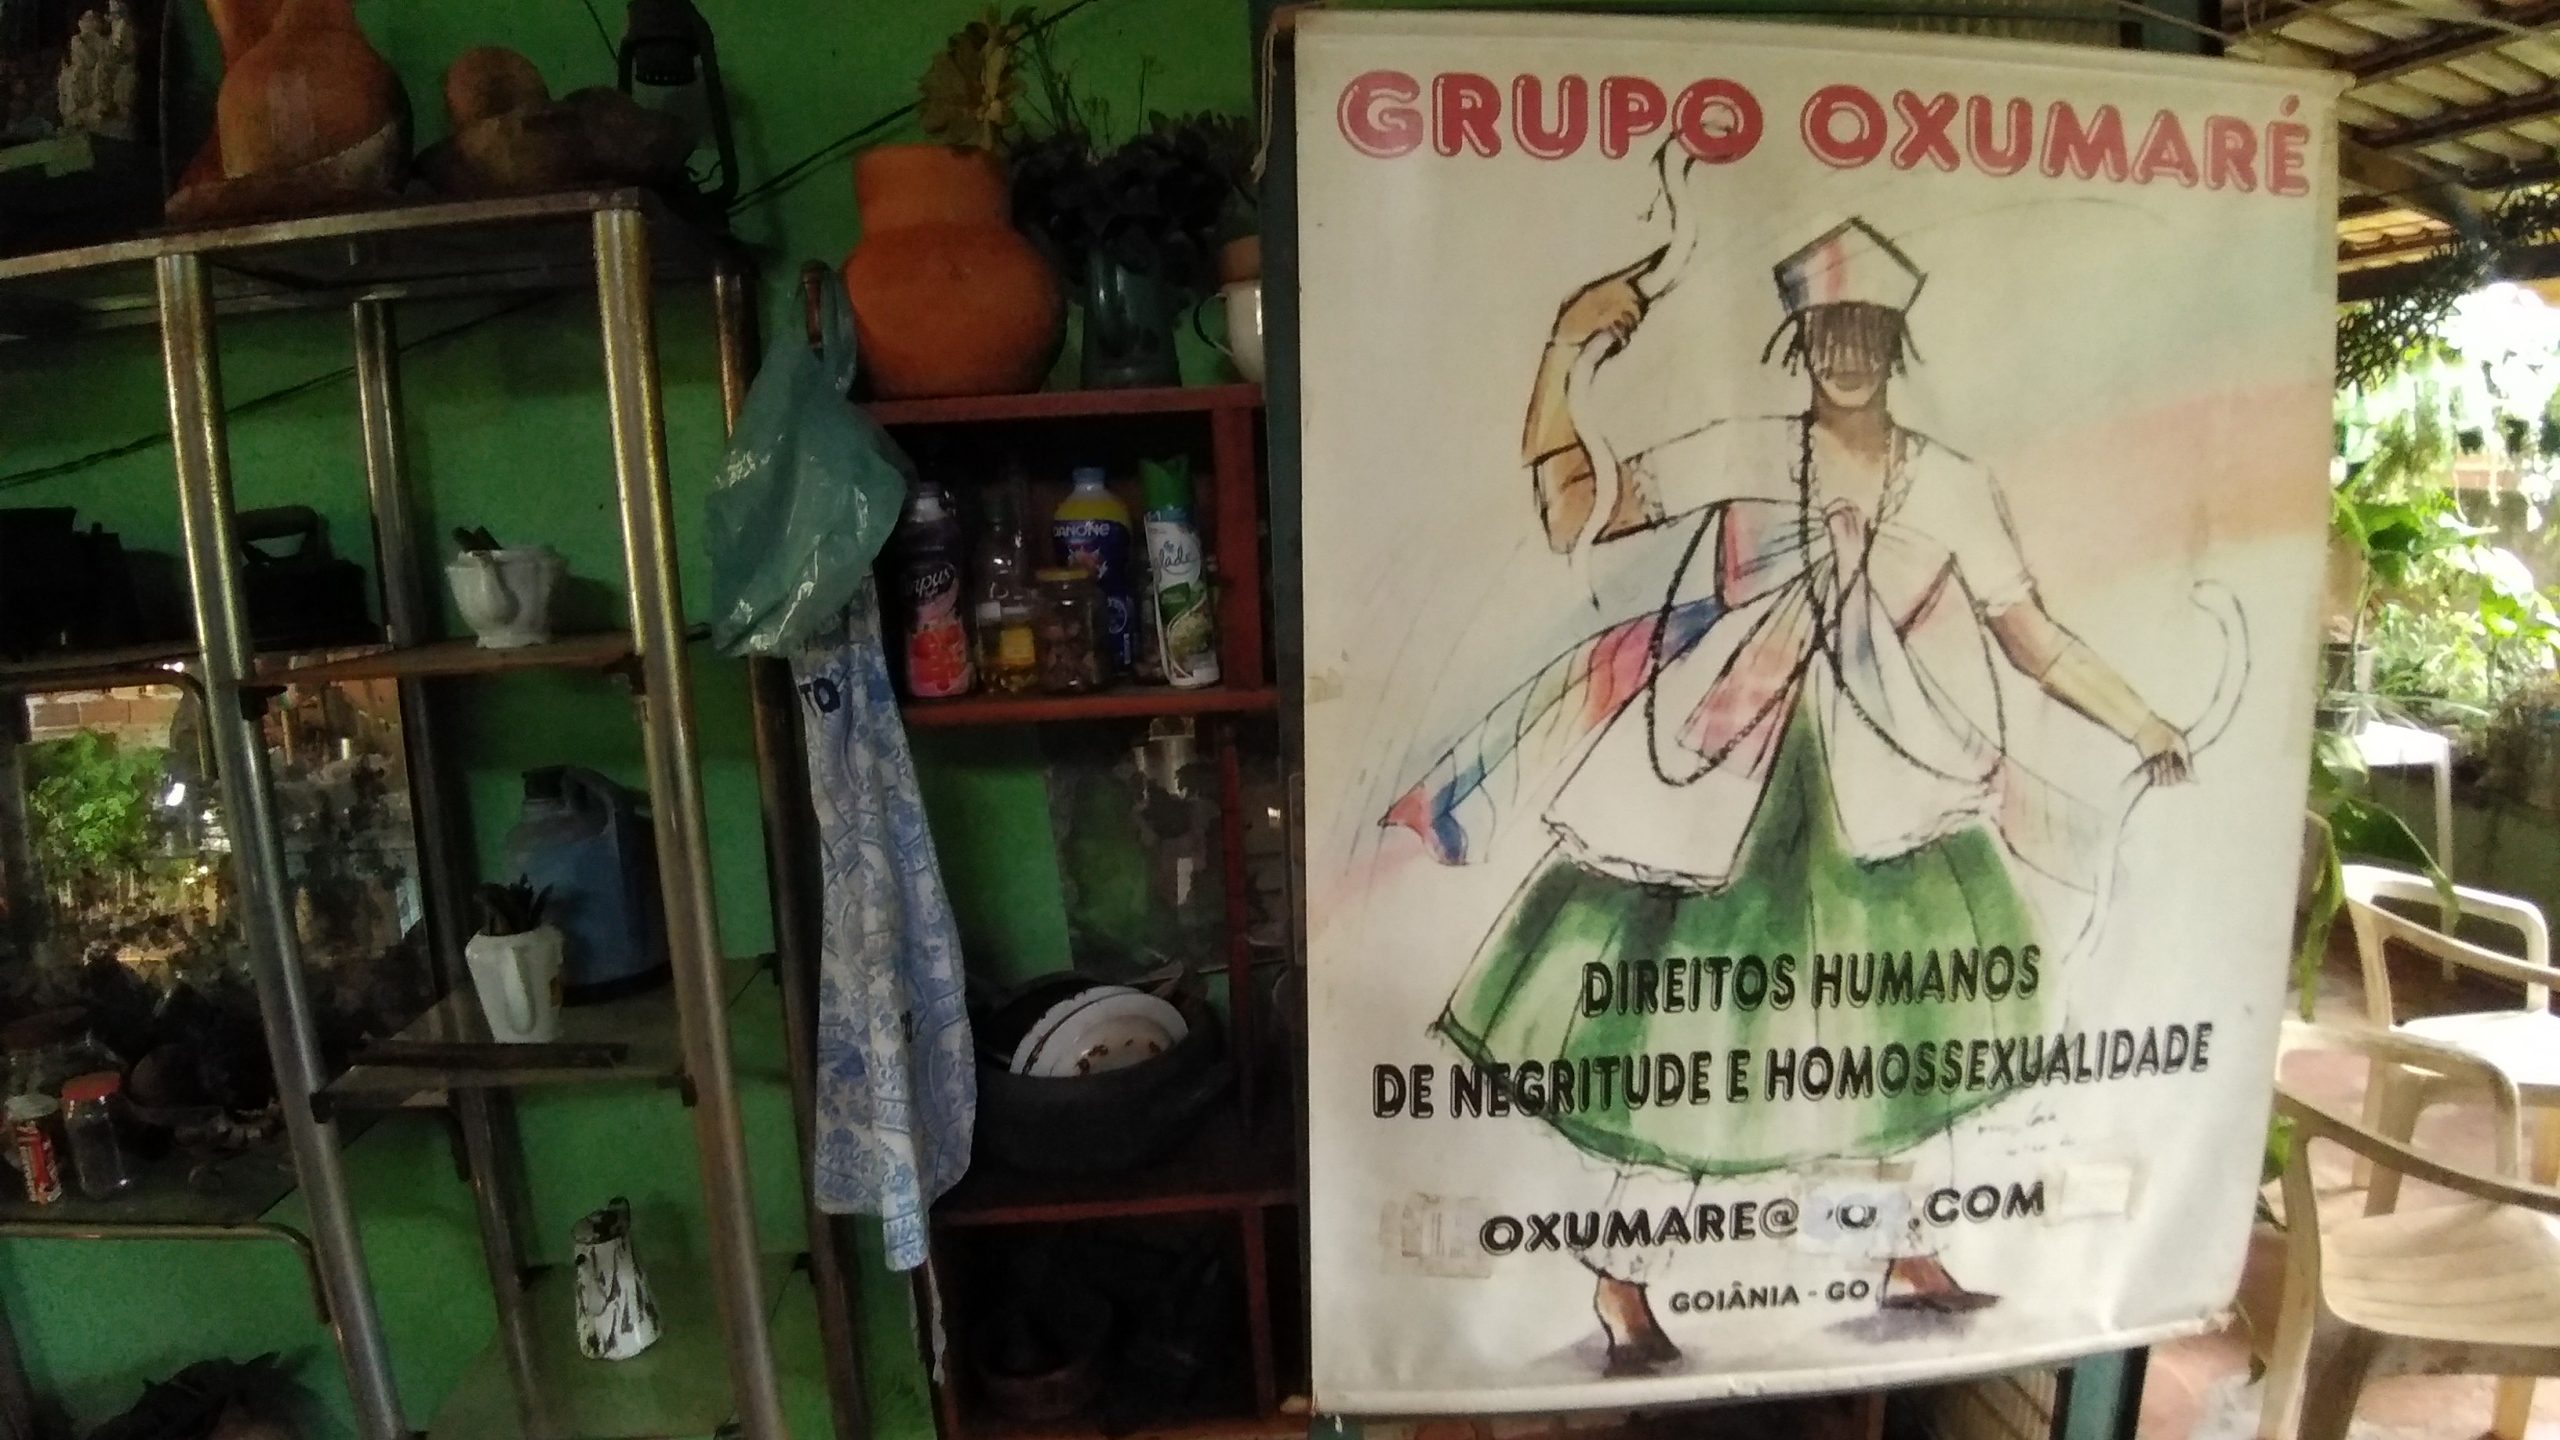 Grupo Oxumaré, organizado por Marco Aurélio e Luzia Basília, no Quilombo Vó Rita: defesa dos direitos humanos e da tolerância. Foto de Ludmila Almeida